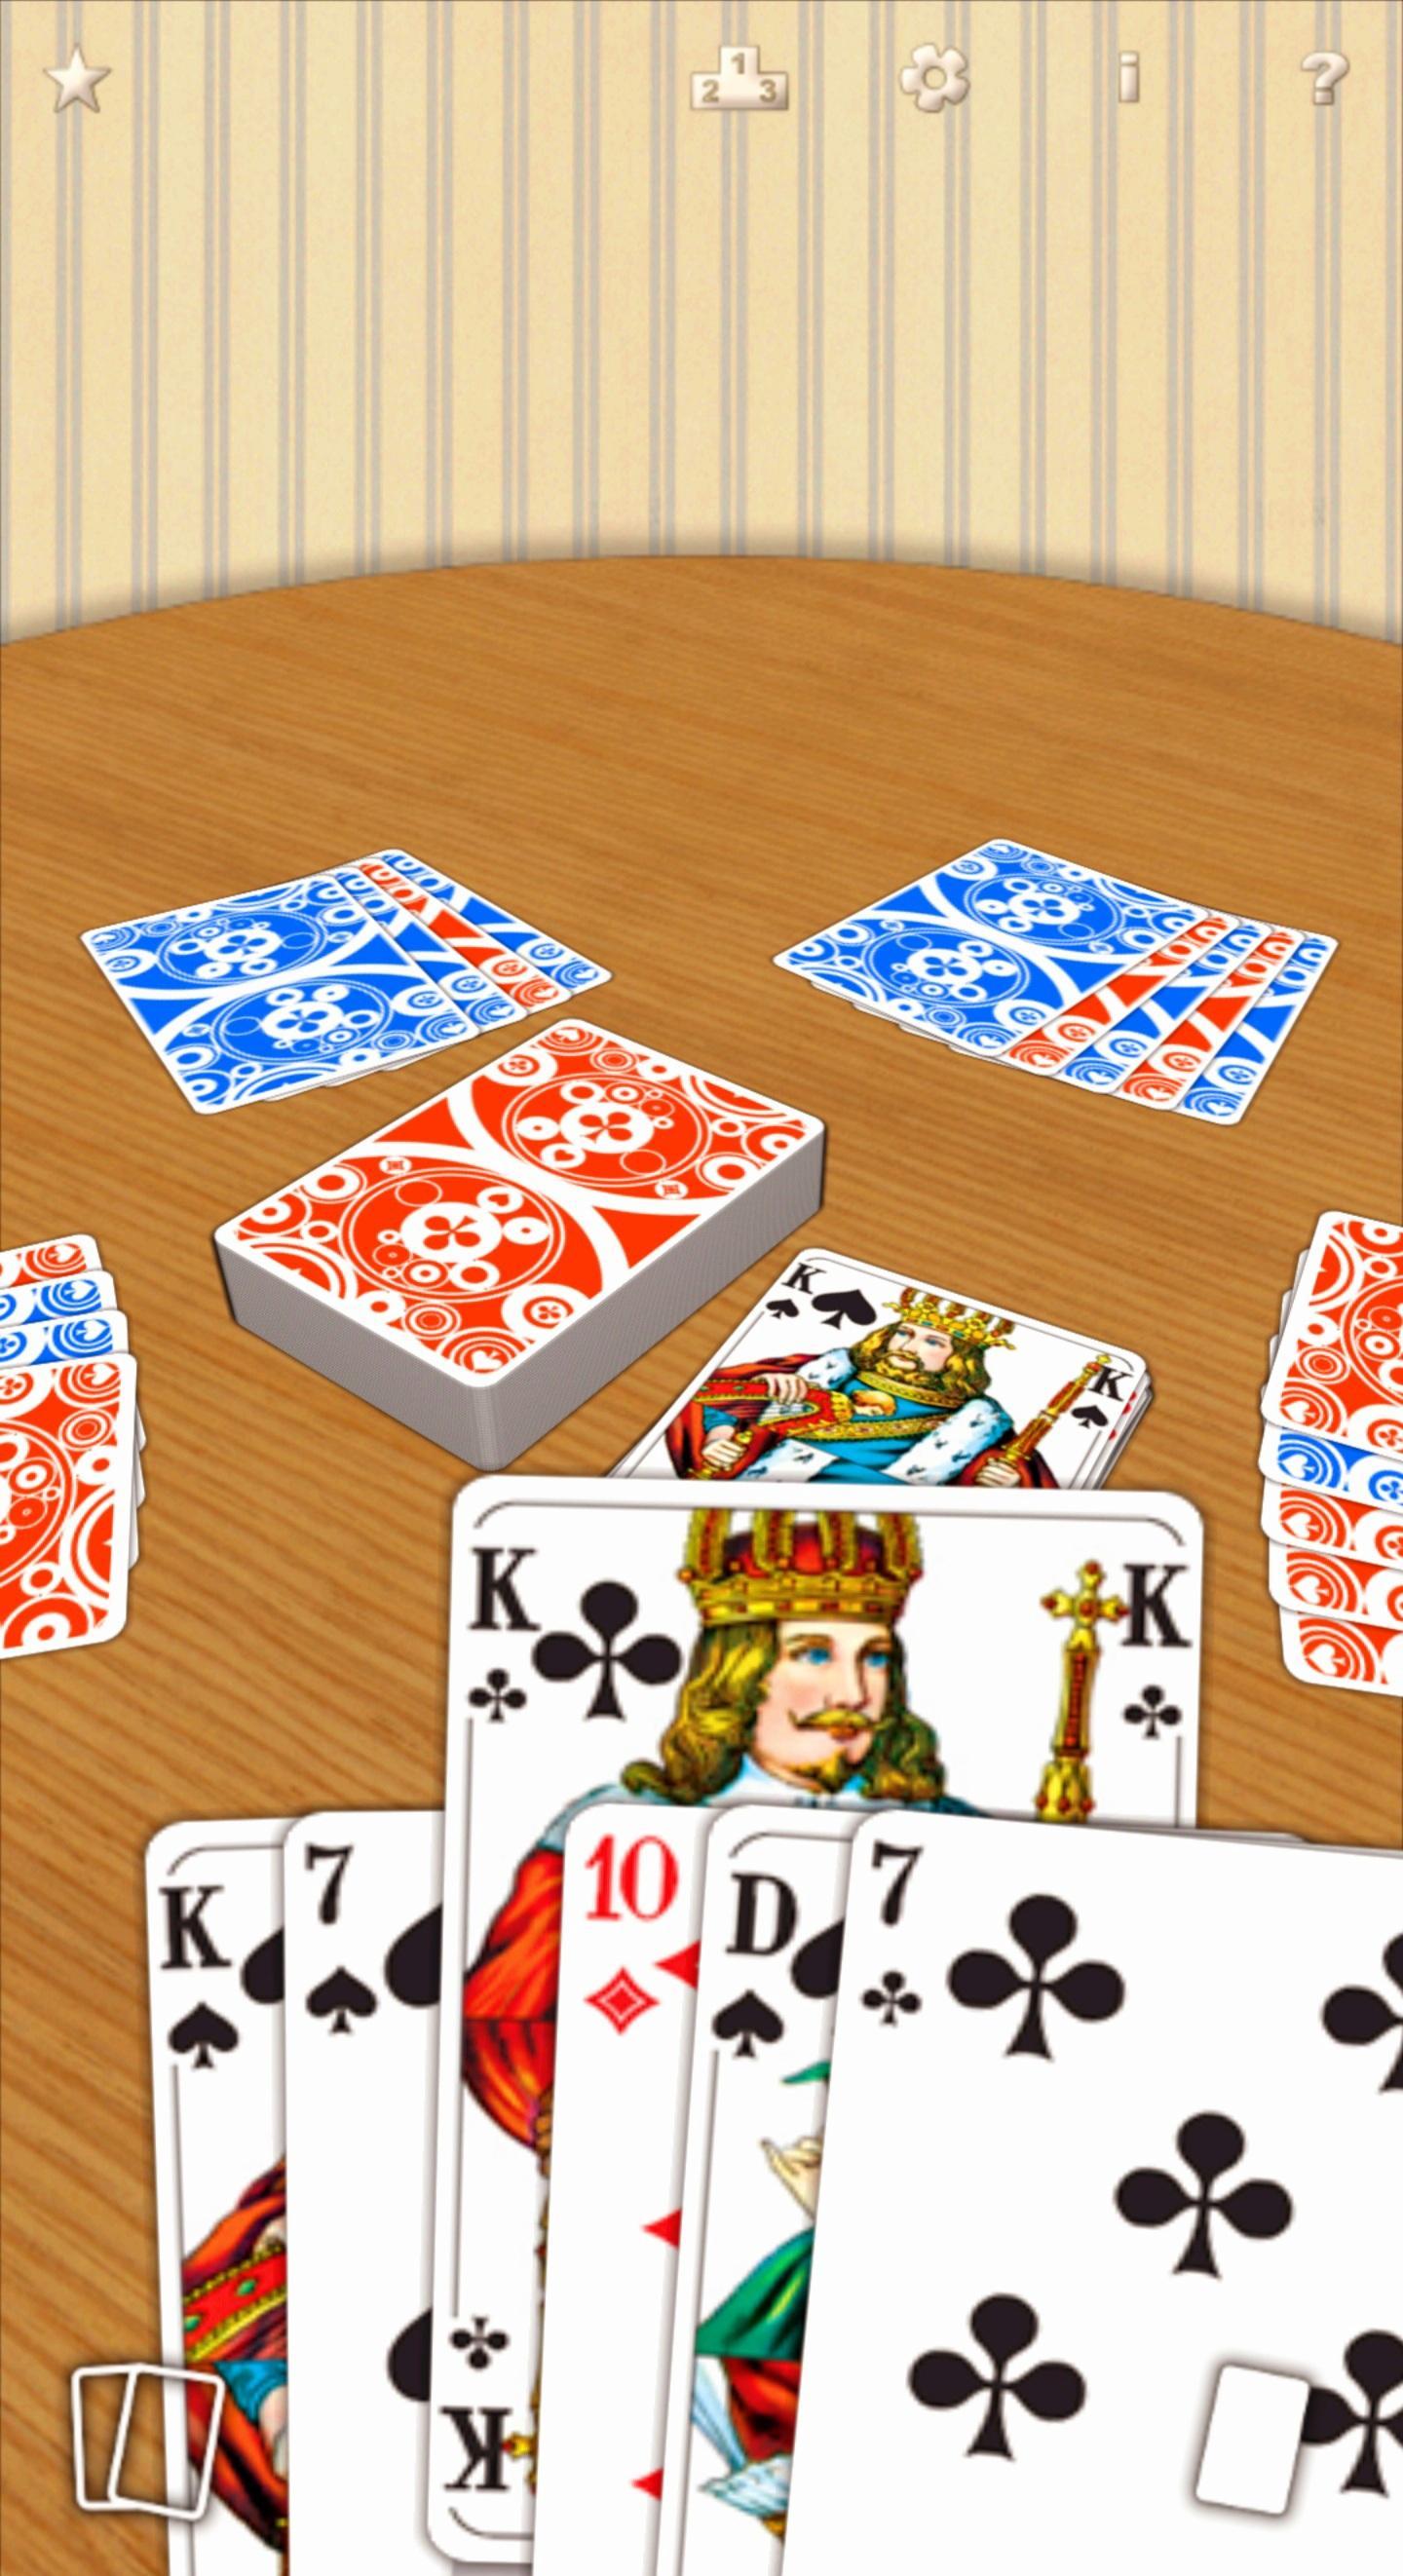 Crazy Eights free card game 1.6.96 Screenshot 18